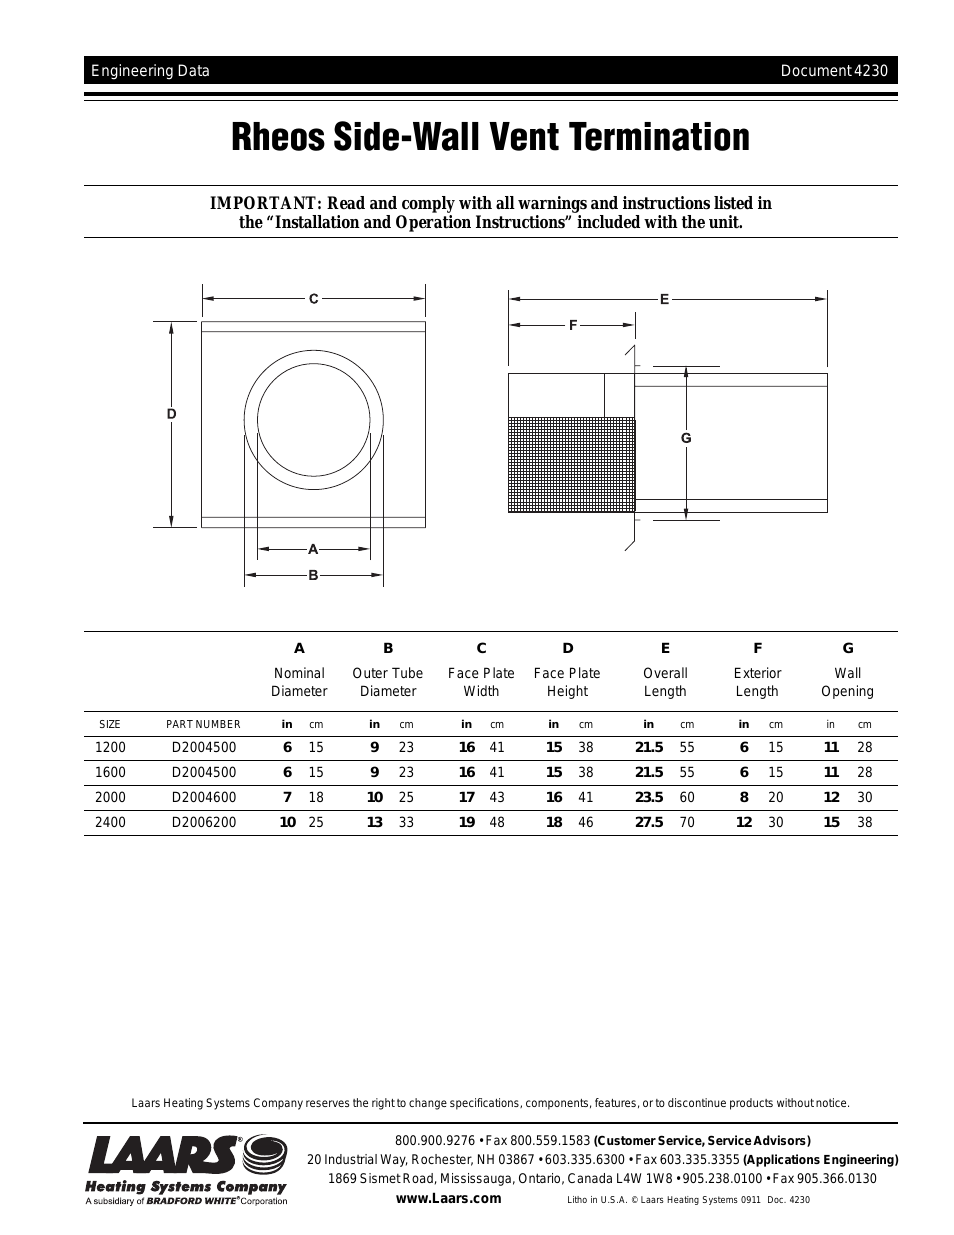 Rheos Side-Wall Vent Termination - Service Manual